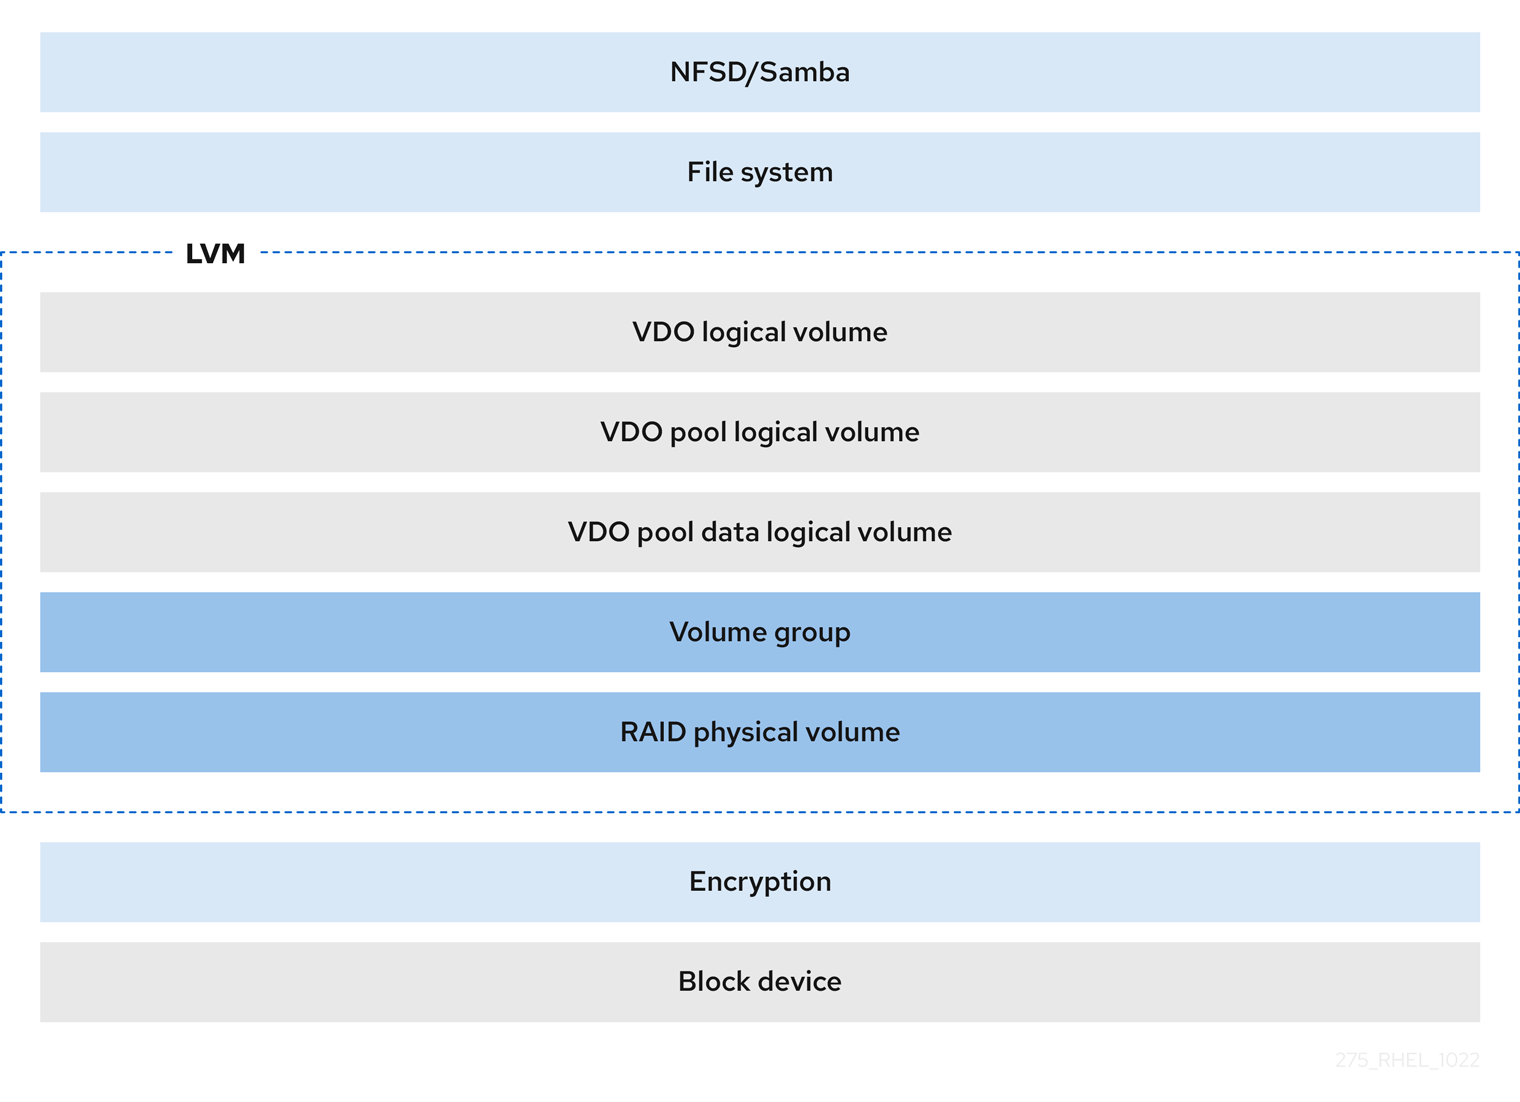 LVM-VDO deployment with encryption